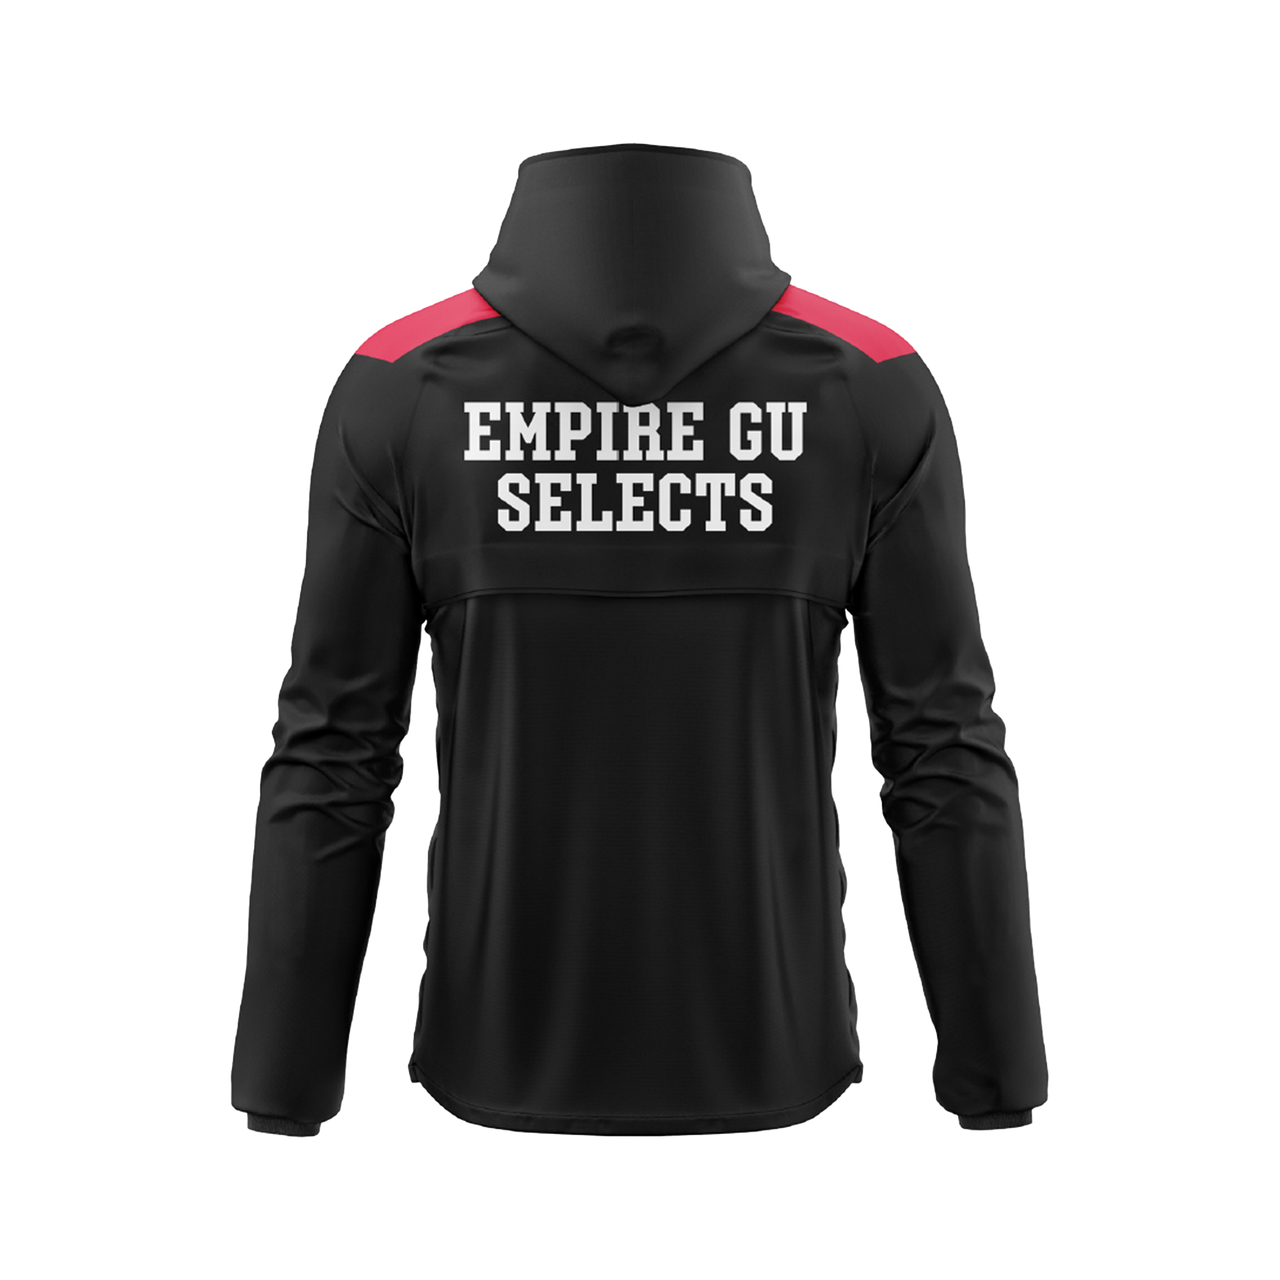 Empire Gu Selects Warm Up Jacket